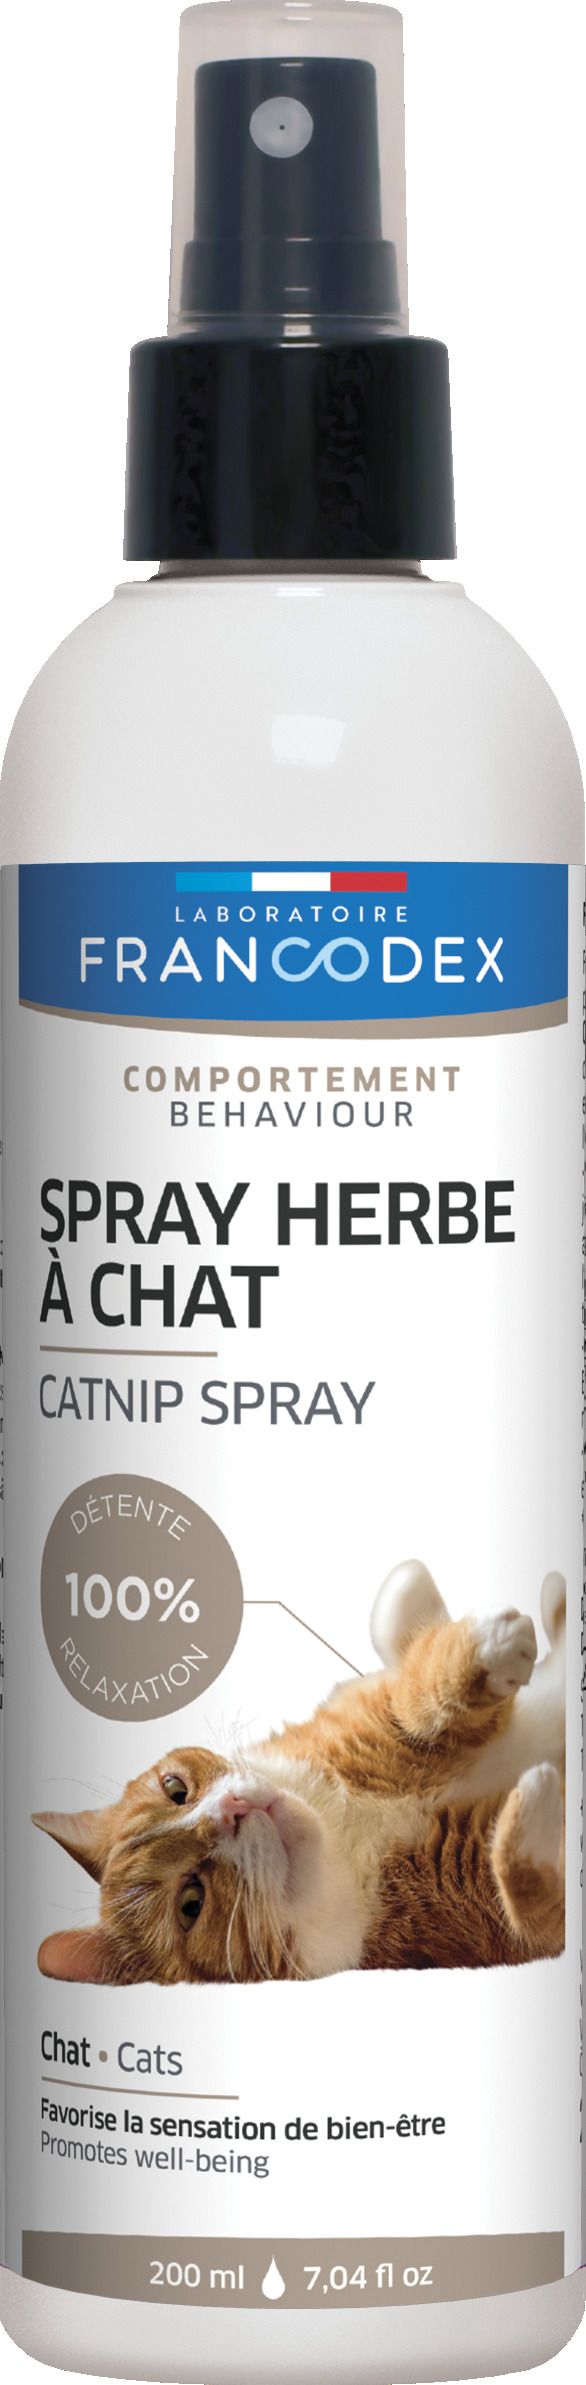 Vitakraft Spray pour herbe à chat - Miscota France